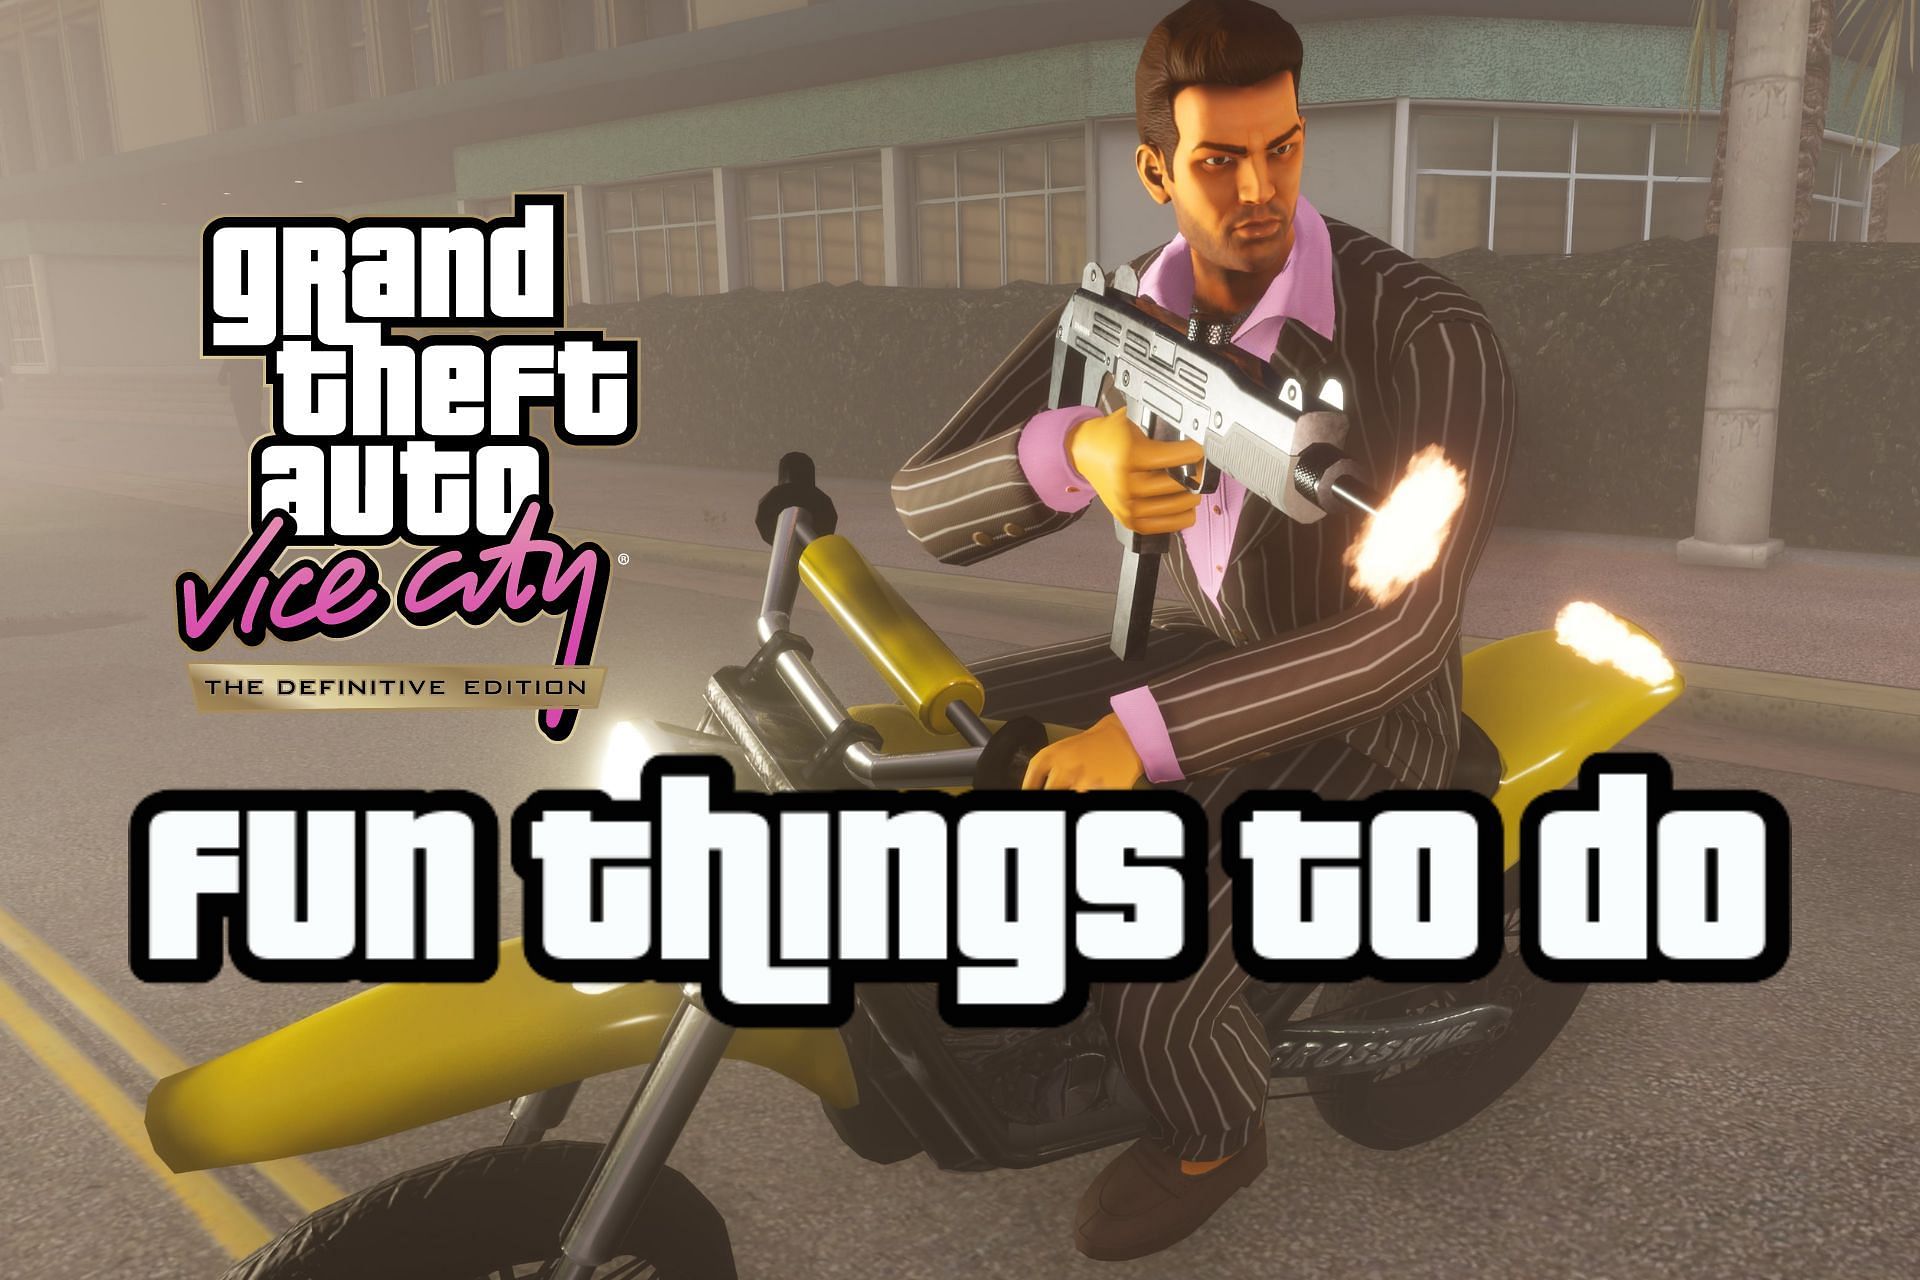 5 fun things GTA players can do in Vice City Definitive Edition (Image via Sportskeeda)